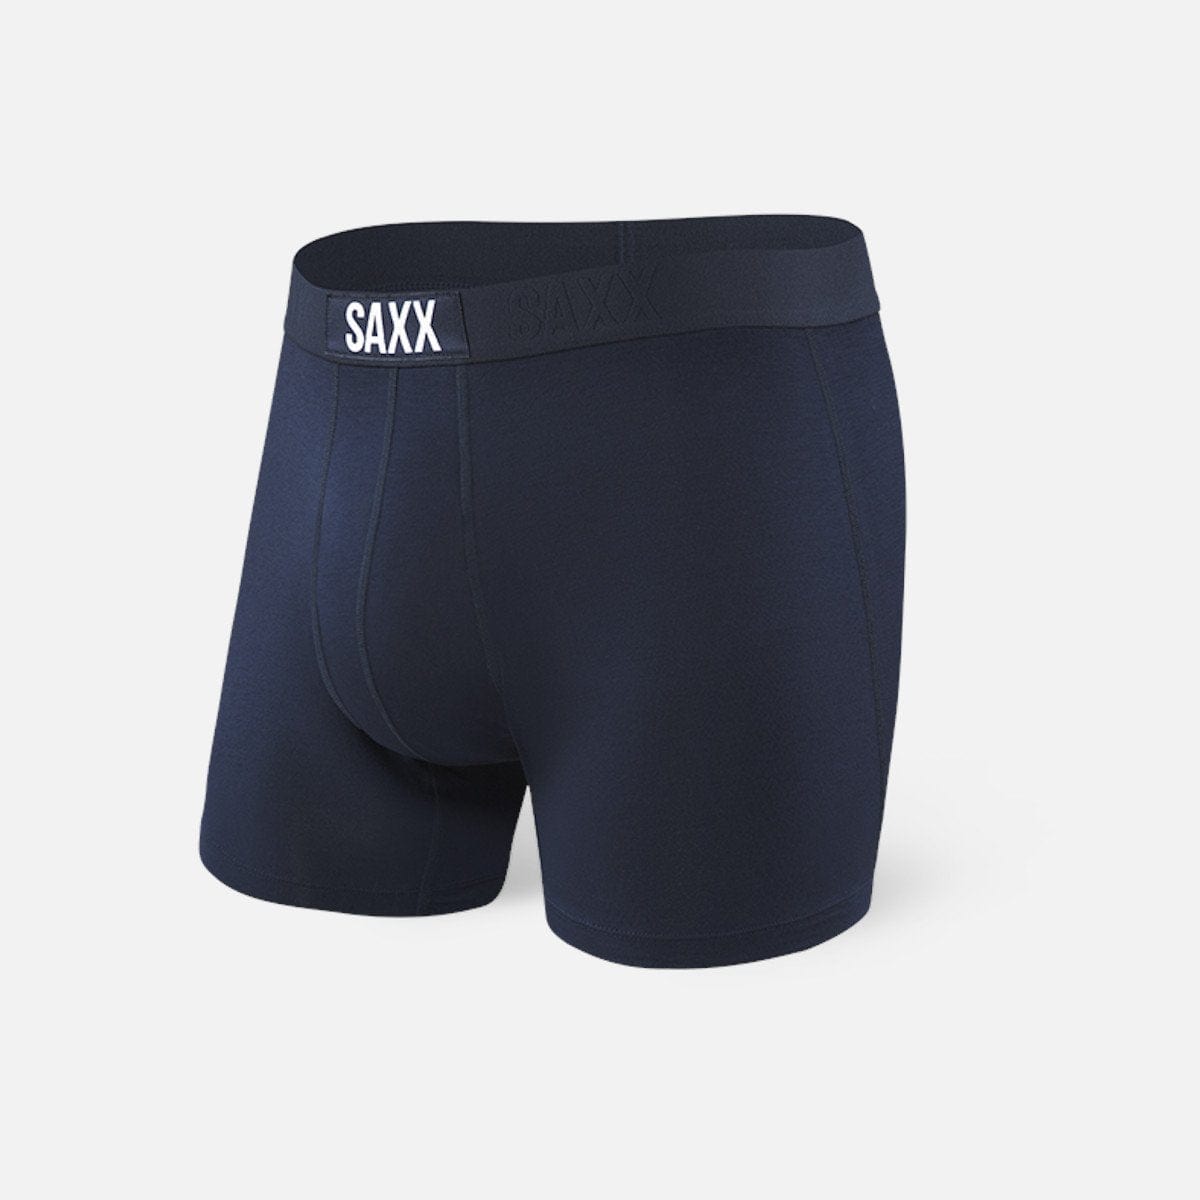 Saxx Vibe Boxers - Black / Grey / Blue (3 Pack)